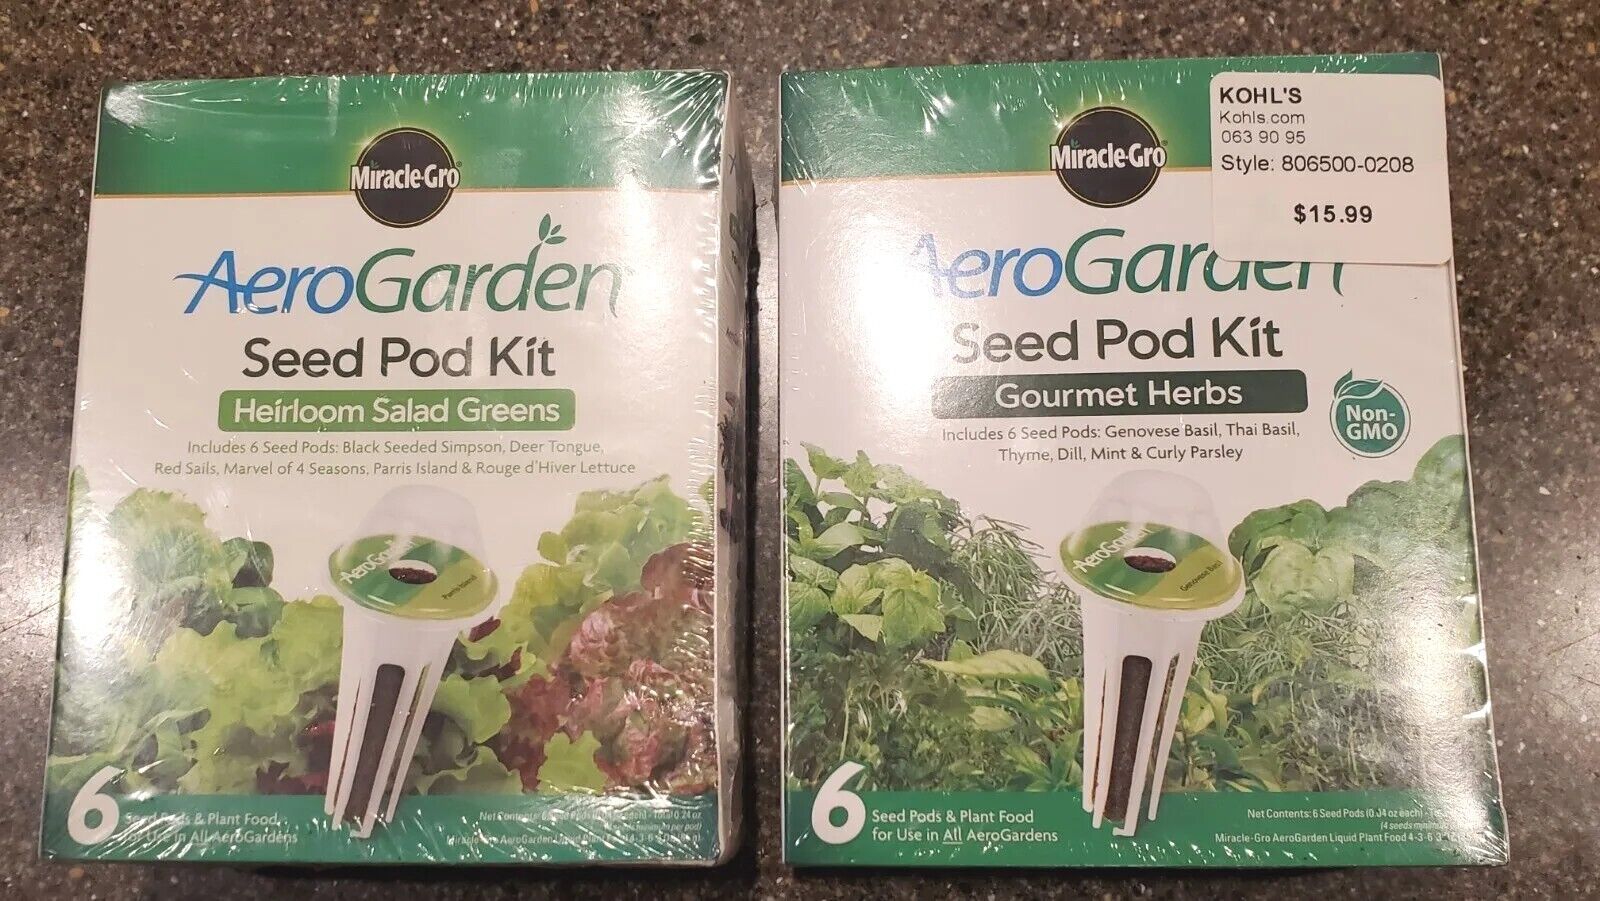 NEW SEALED Qty 2 AeroGarden Seed Pod Kits Gourmet Herbs, Heirloom Salad Greens